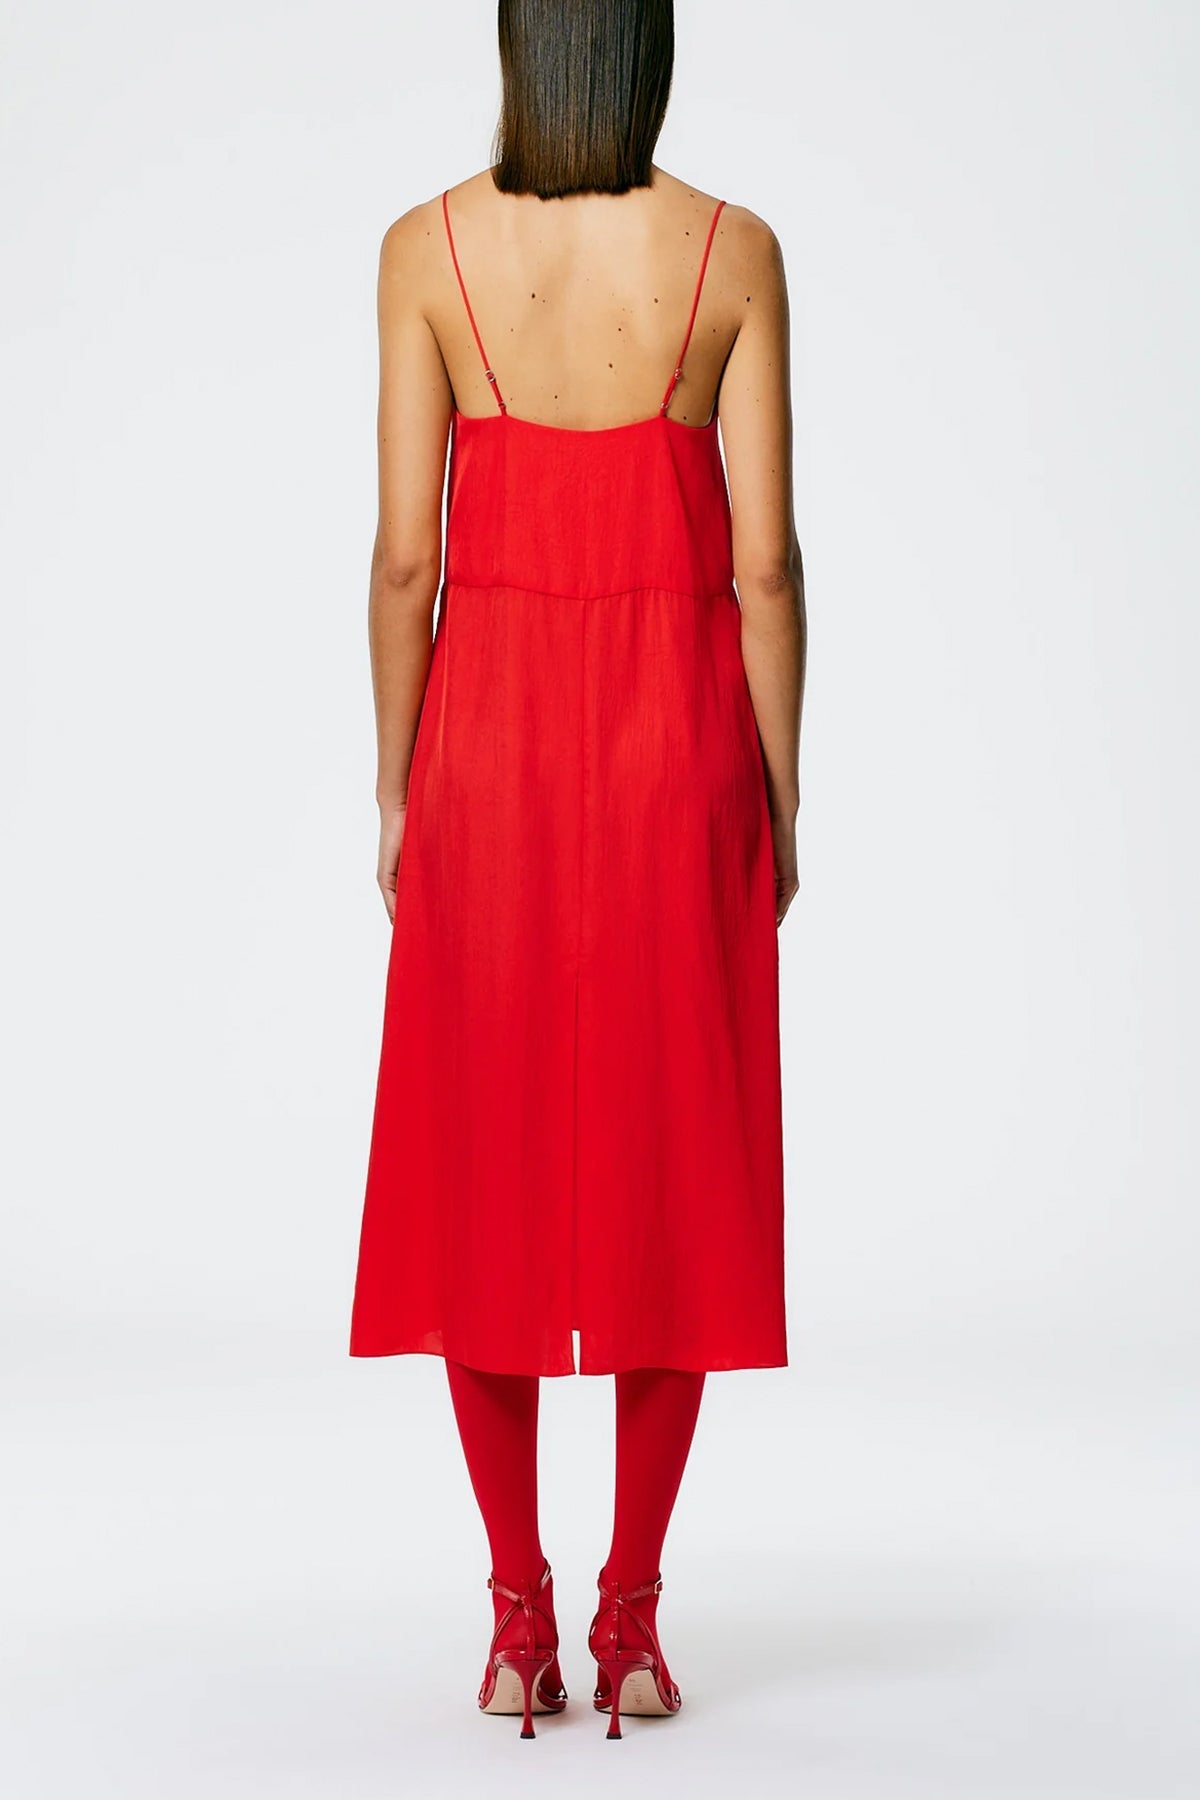 The Slip Dress in Red - shop-olivia.com